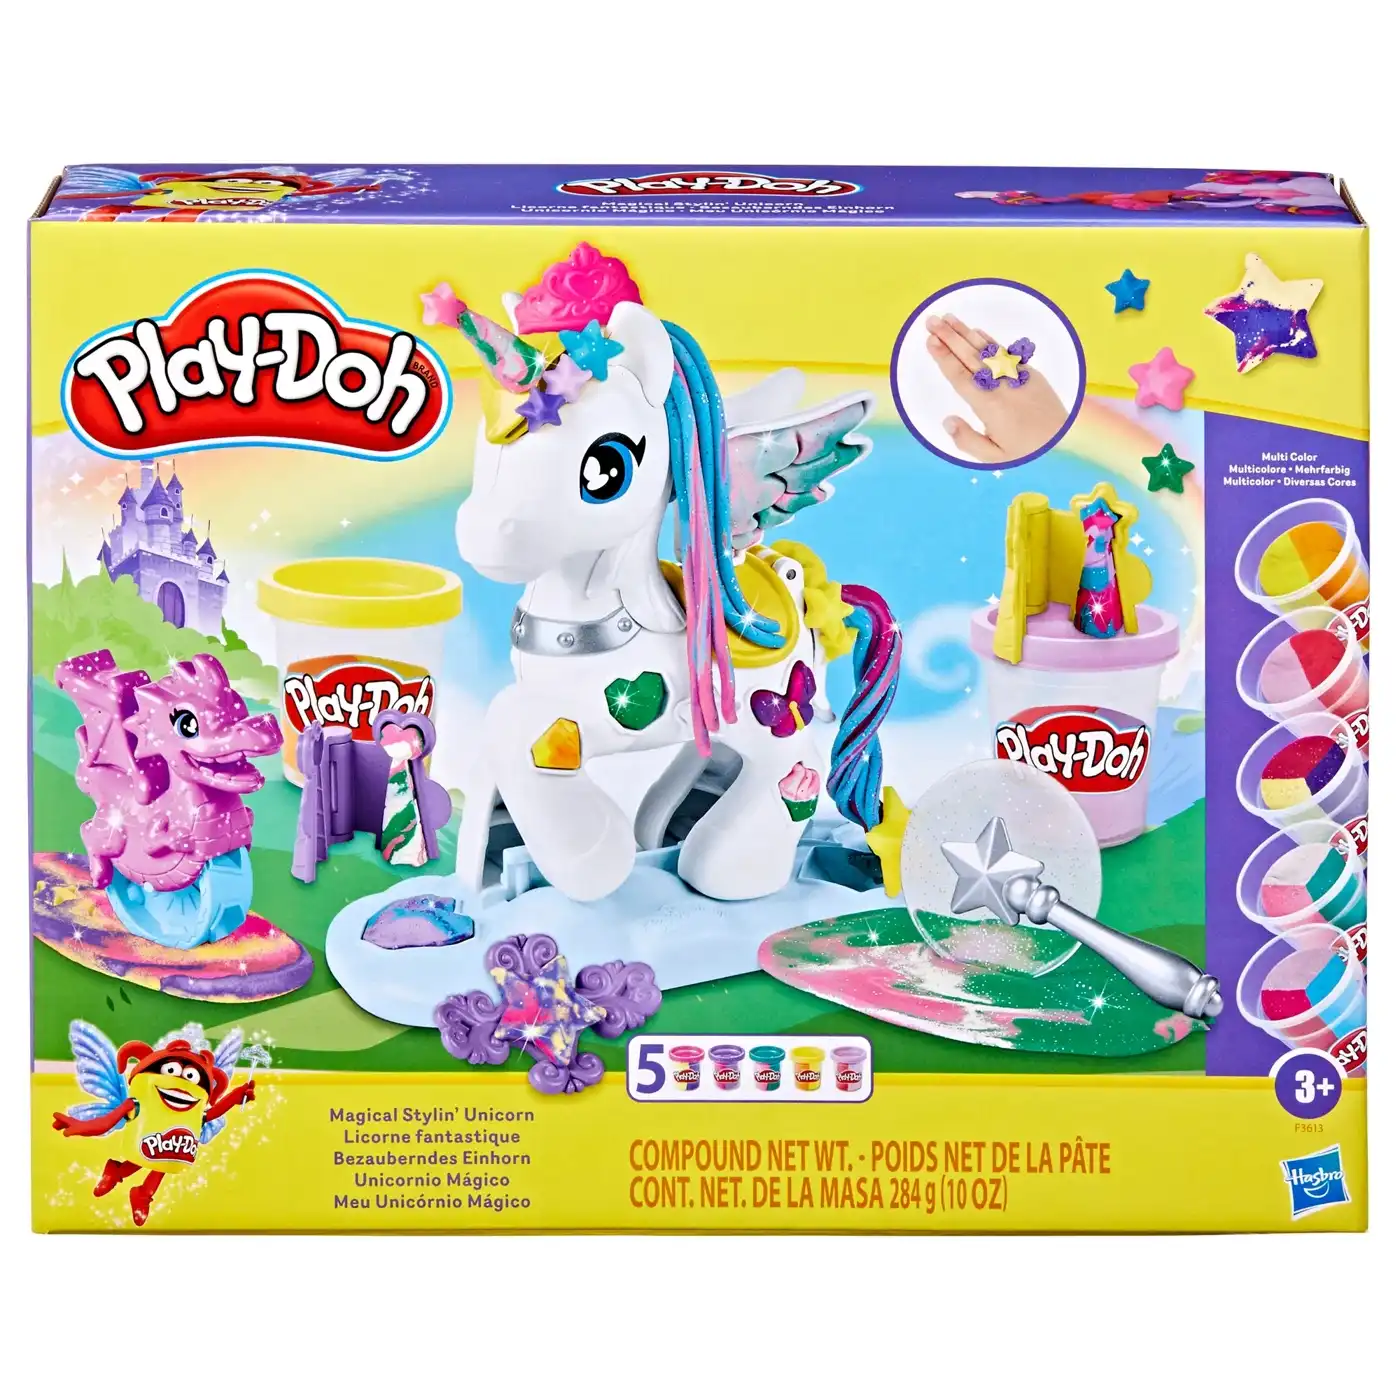 Play-Doh Magical Stylin’ Unicorn